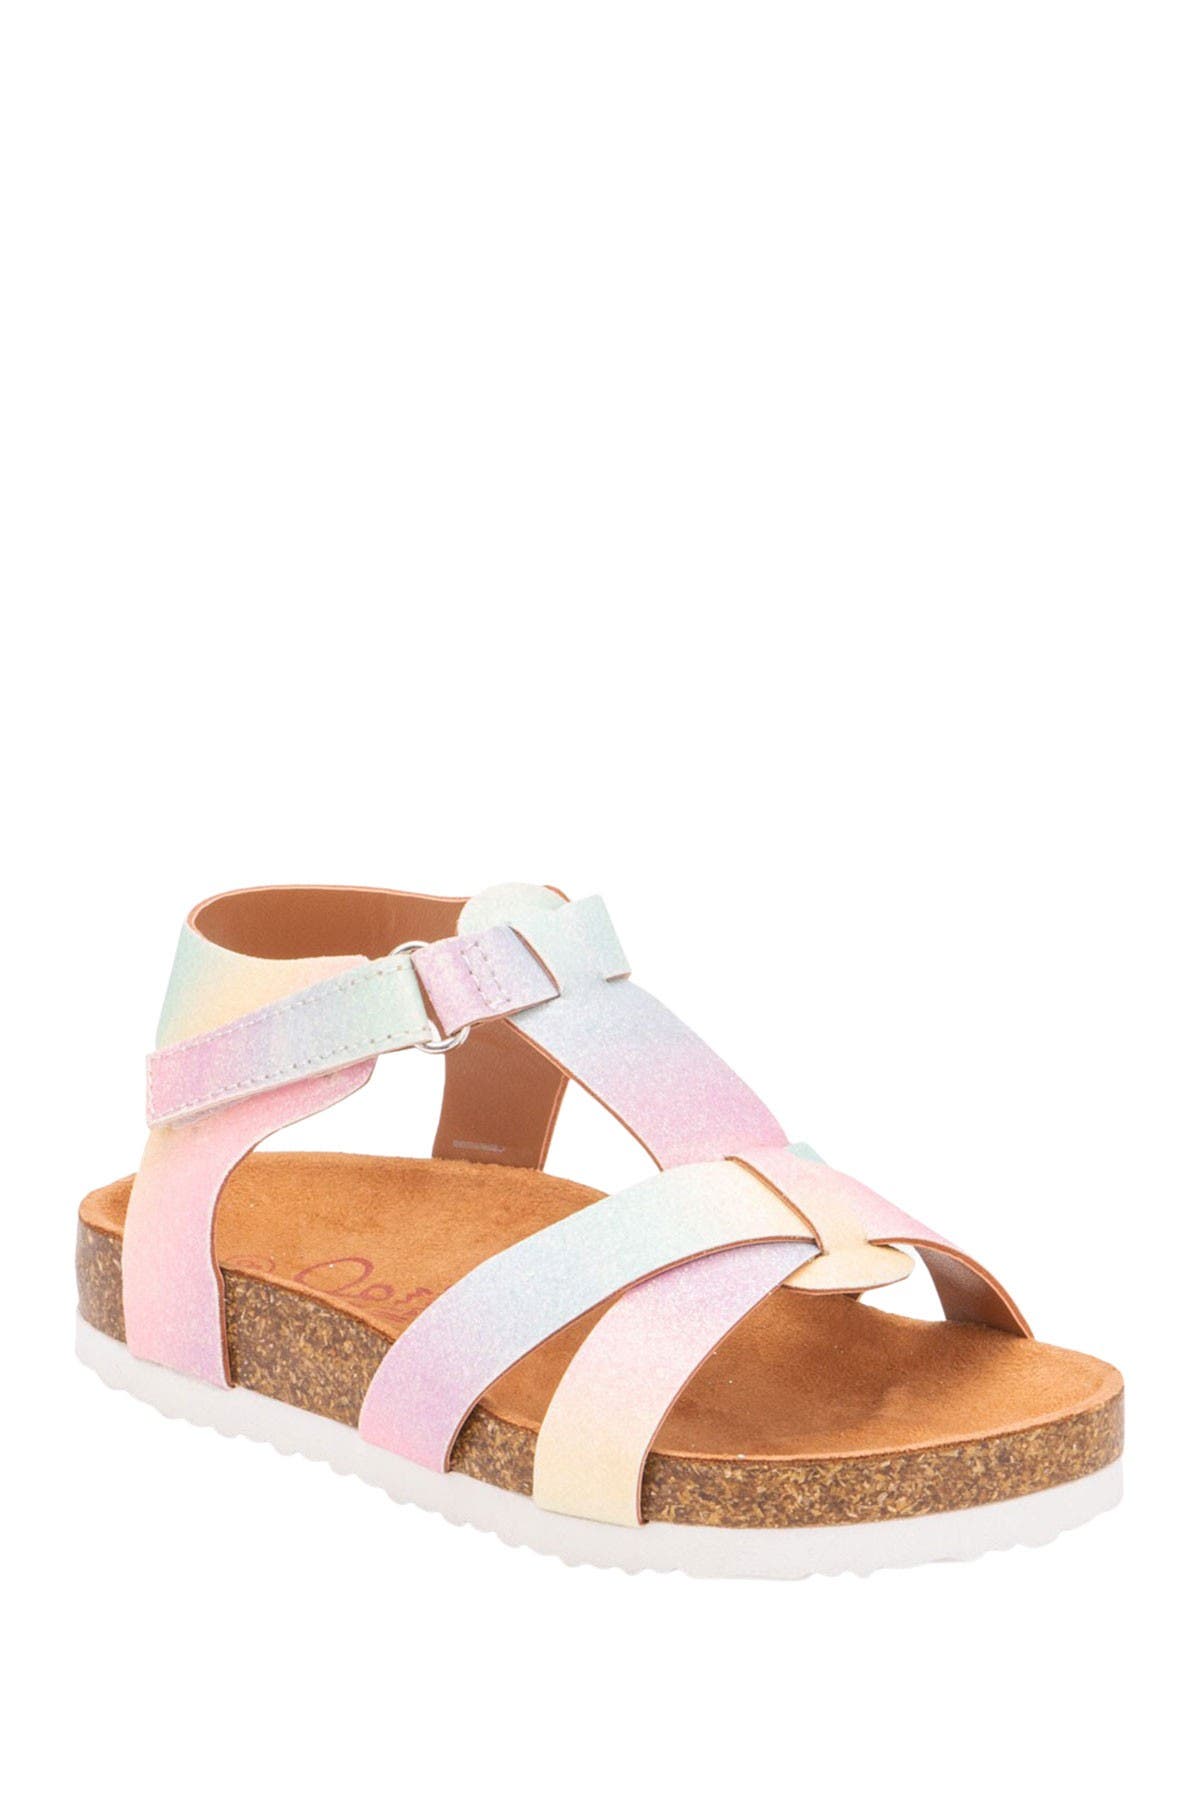 Olivia Miller Kids' Glitter Strap Comfort Sandal In Pastel Rainbow